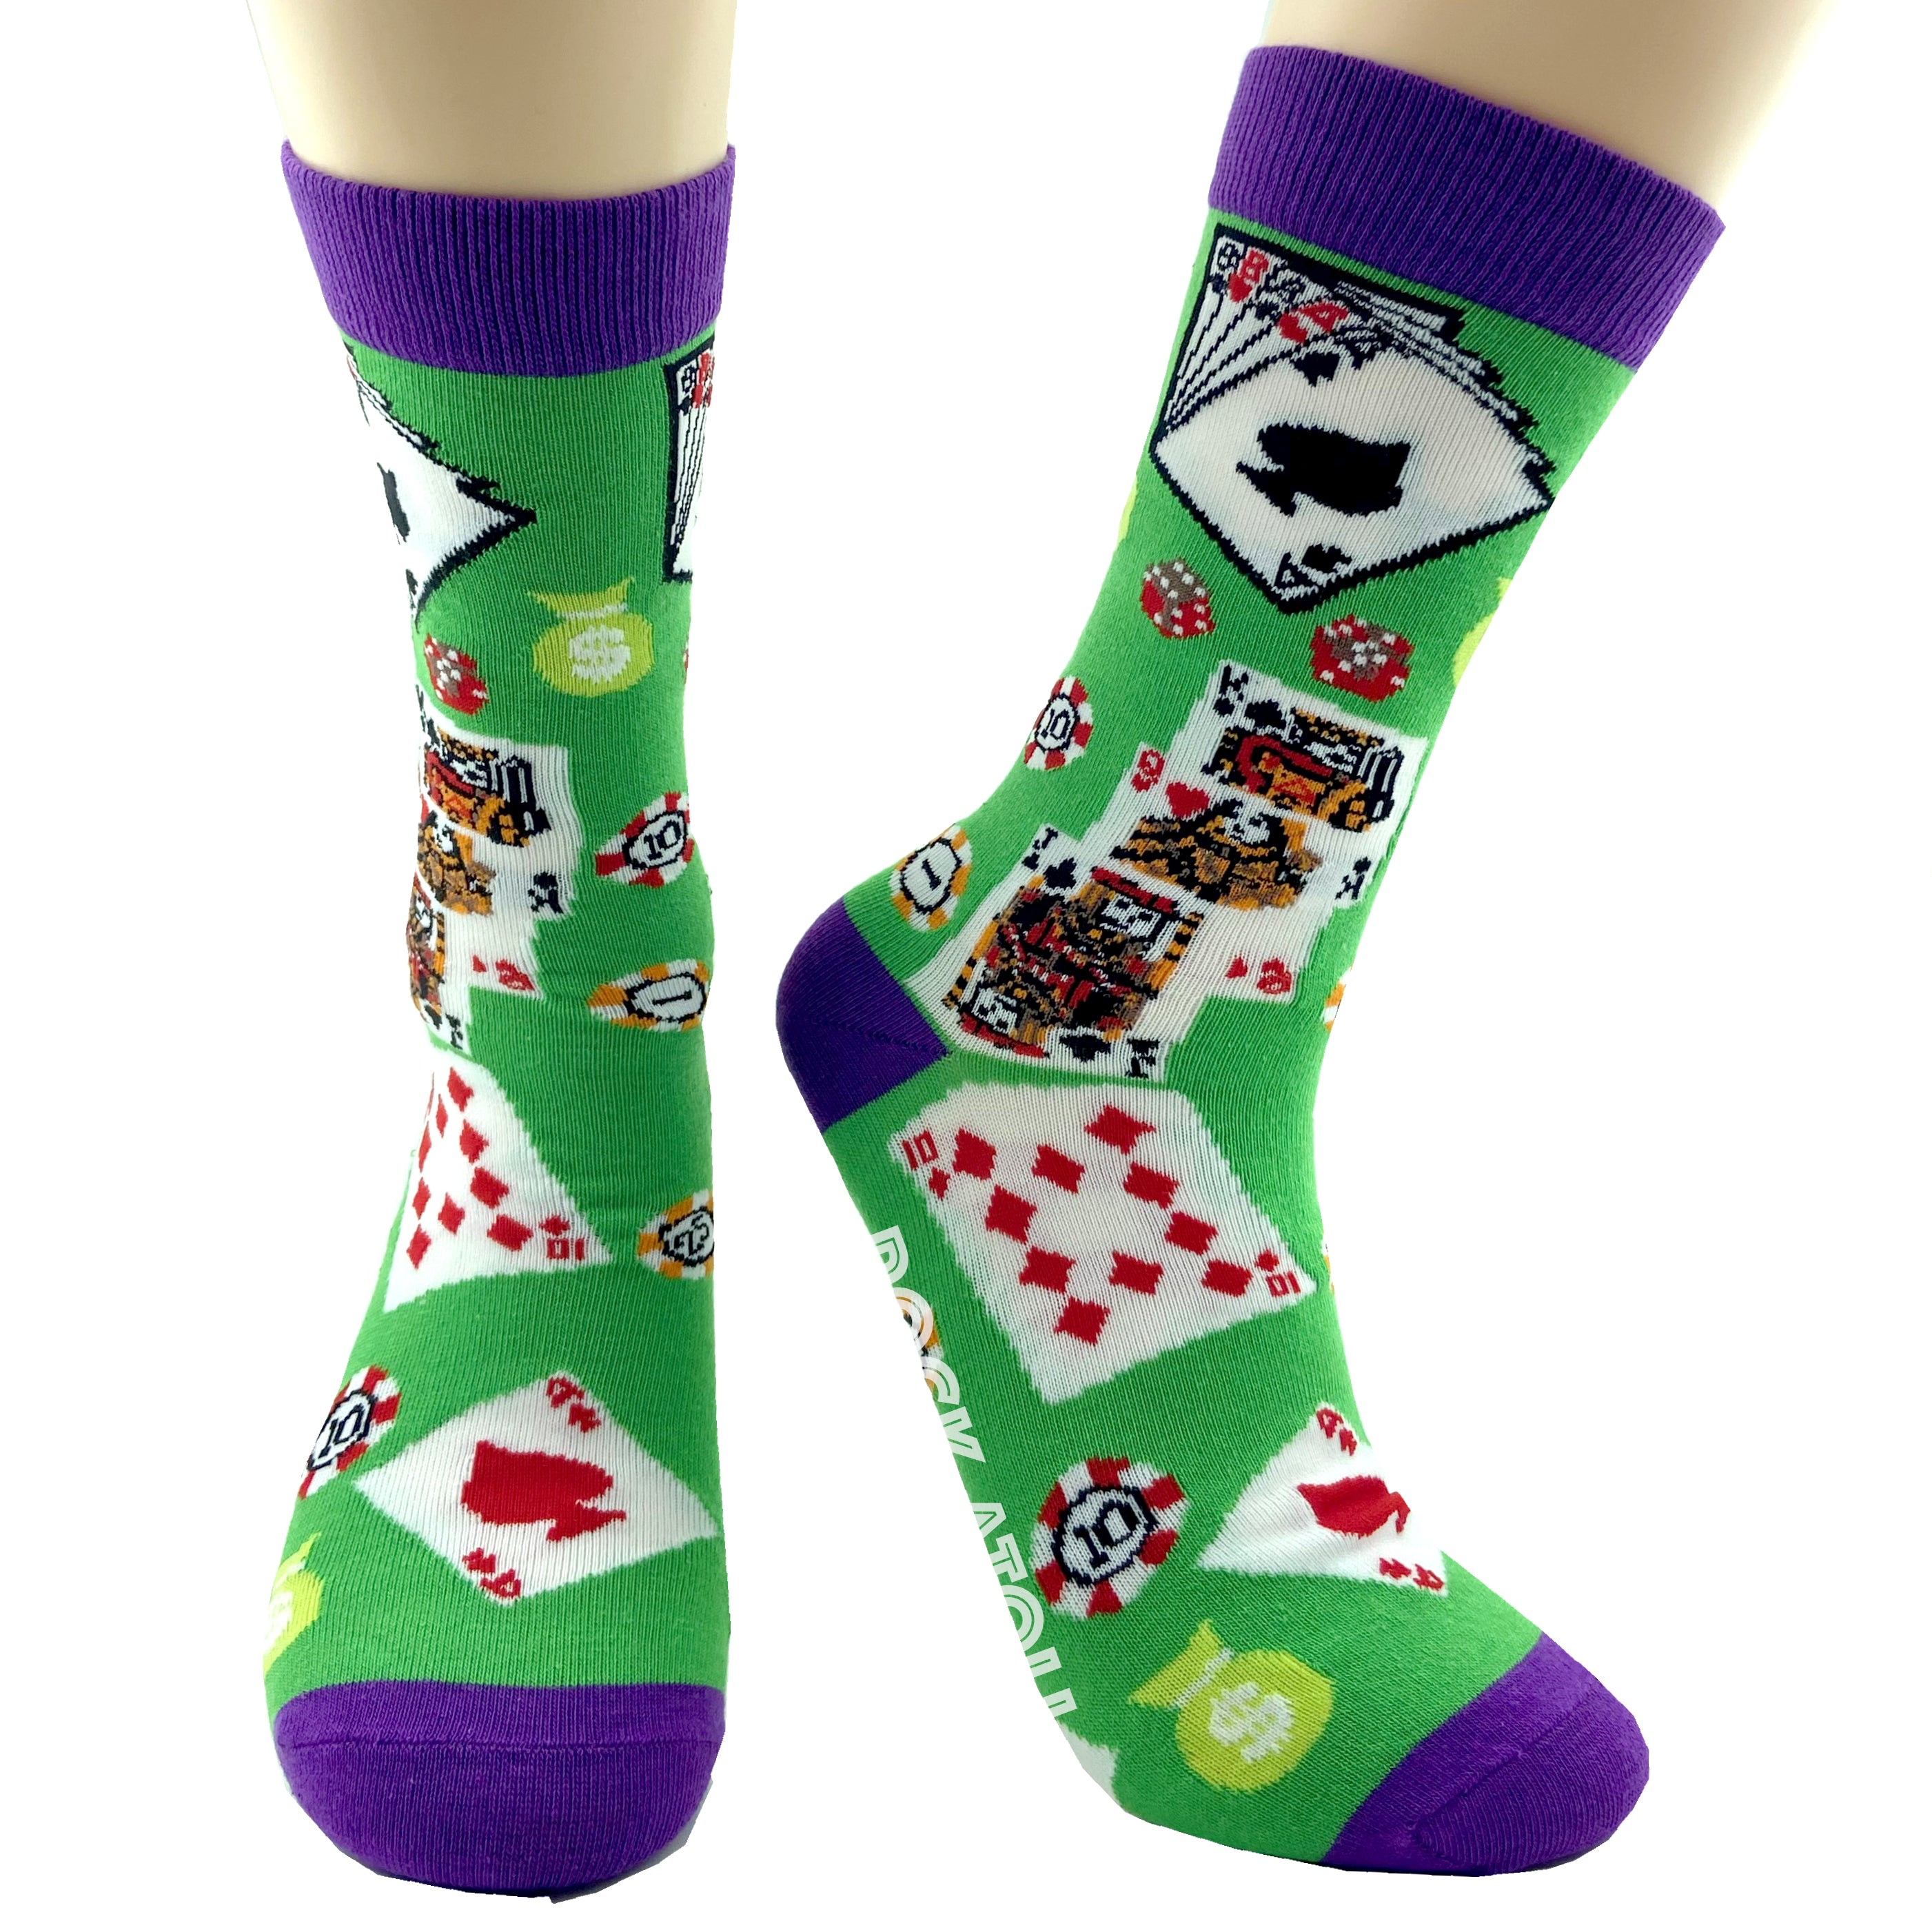 Unisex Bright Green Playing Card Poker Themed Novelty Dress Socks